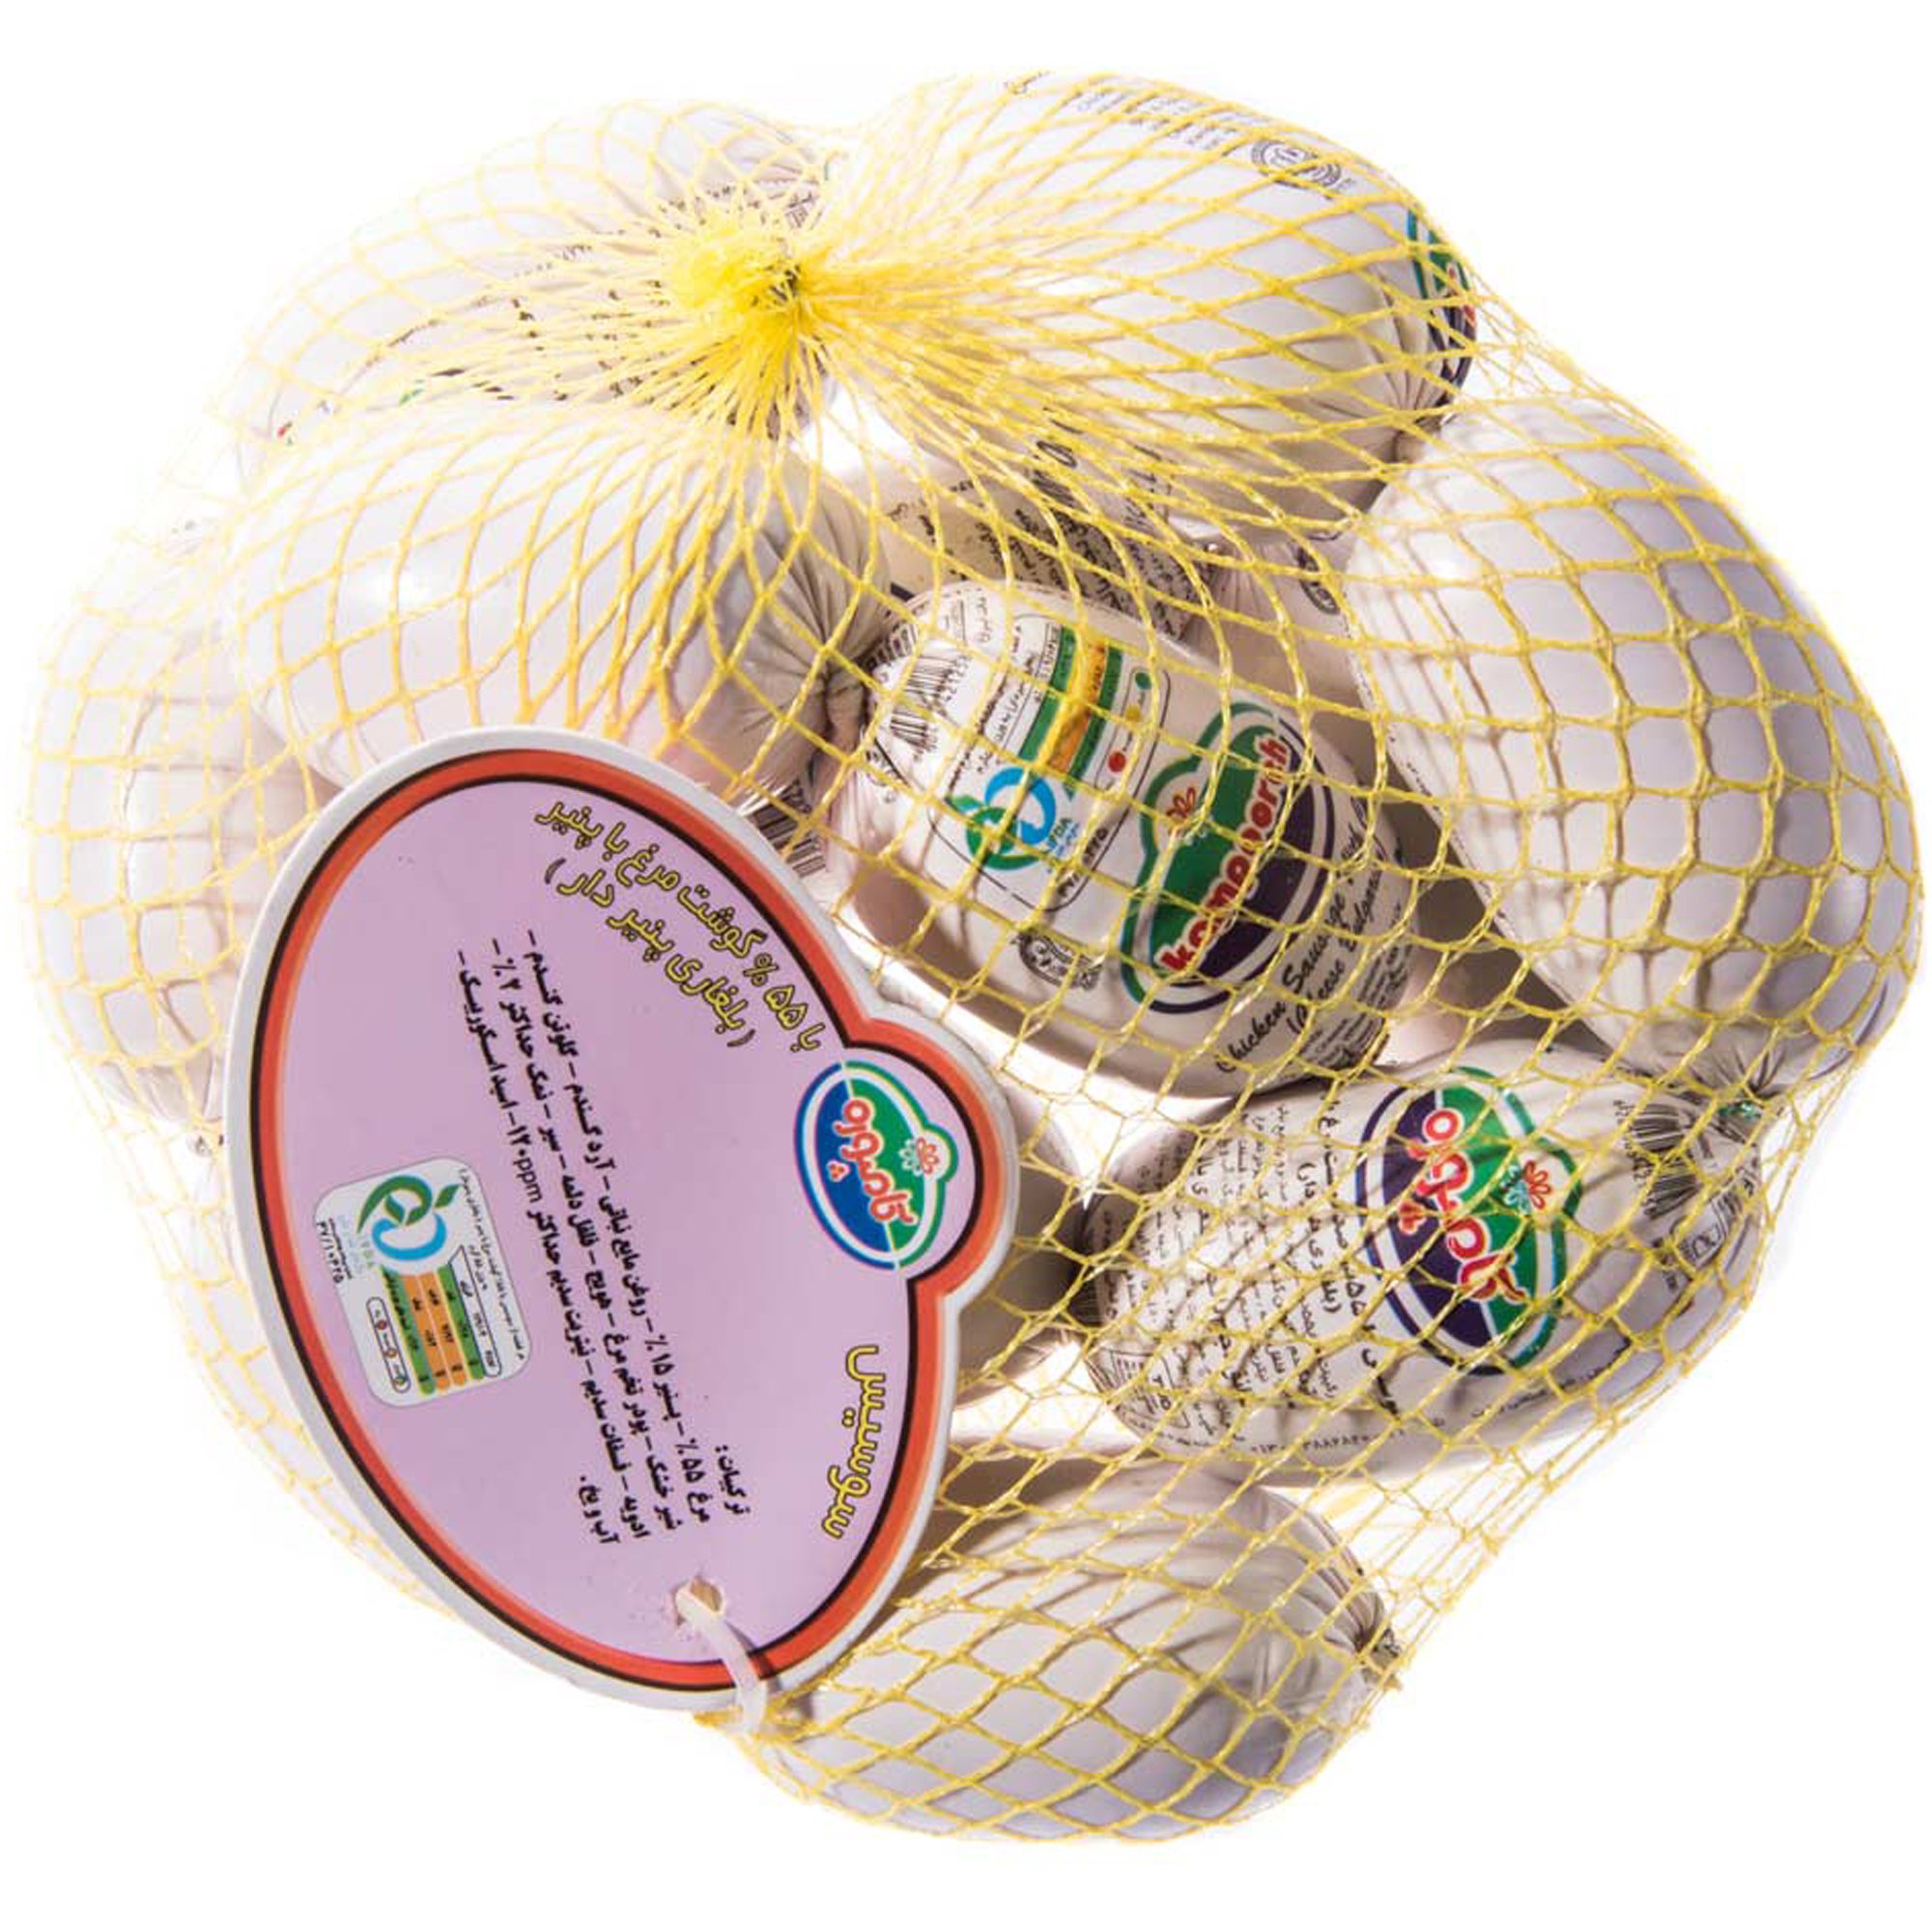 سوسیس بلغاری مرغ ۵۵% پنیری کامپوره ۱ کیلوگرمی